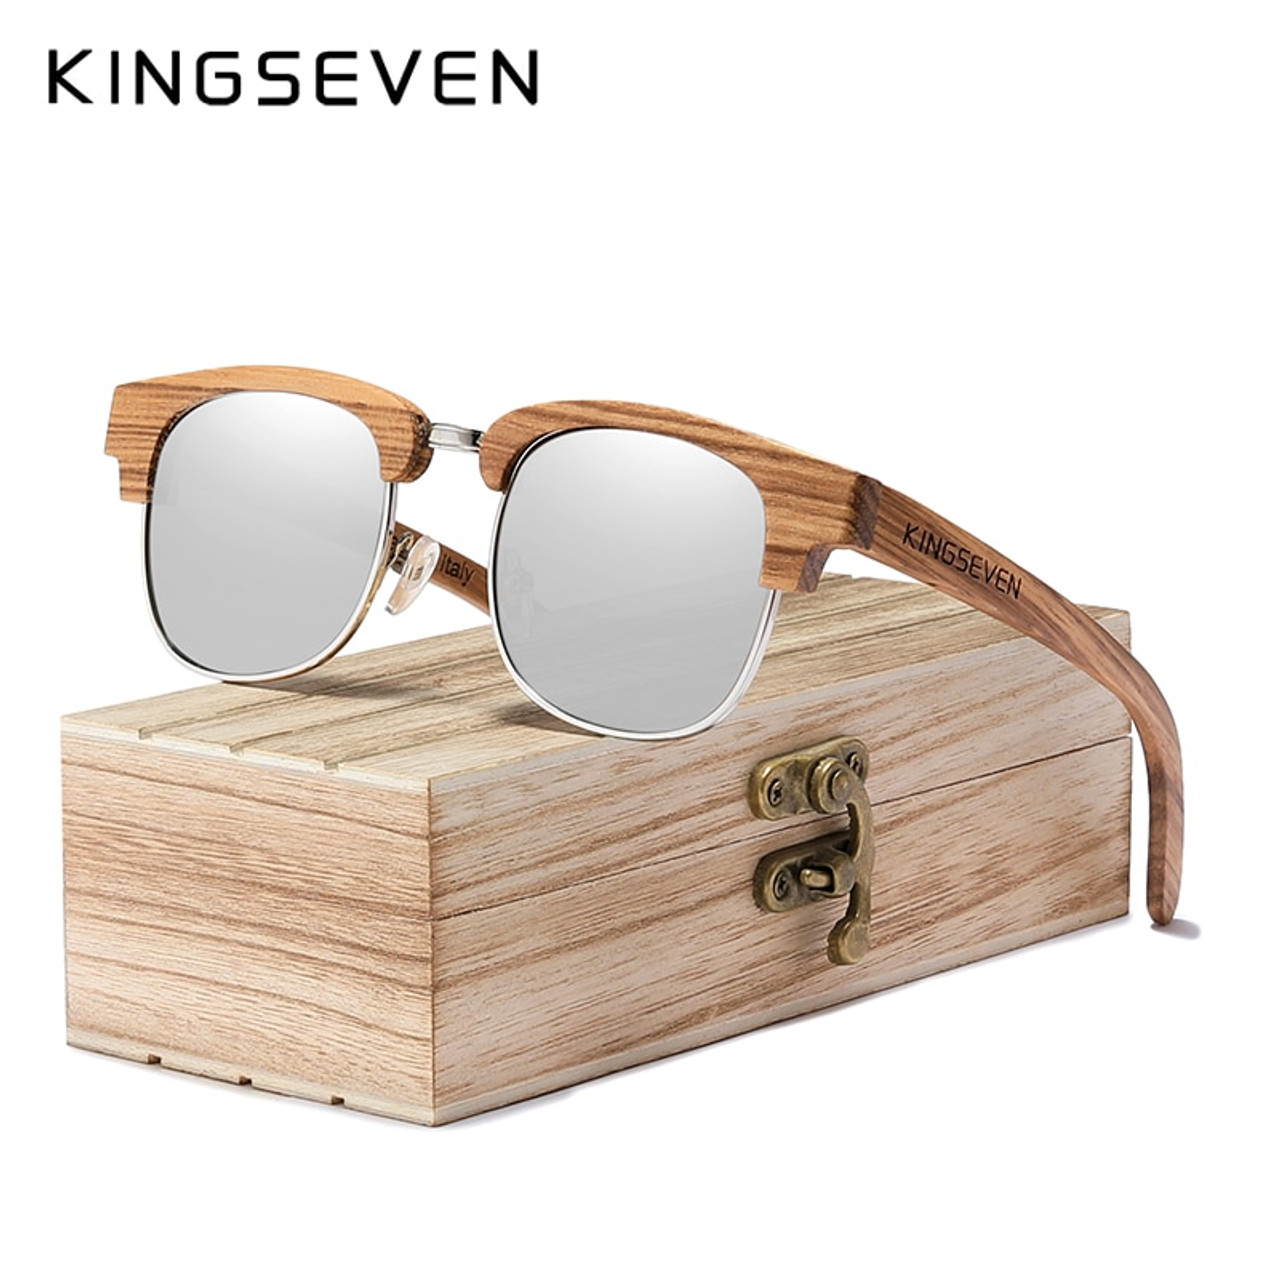 KINGSEVEN 2020 New Retro Wooden Natural Male Sunglasses Polarized Men  Spring Hinge UV400 Protection Oculos De Sol Feminino G5917, Men's  Sunglasses